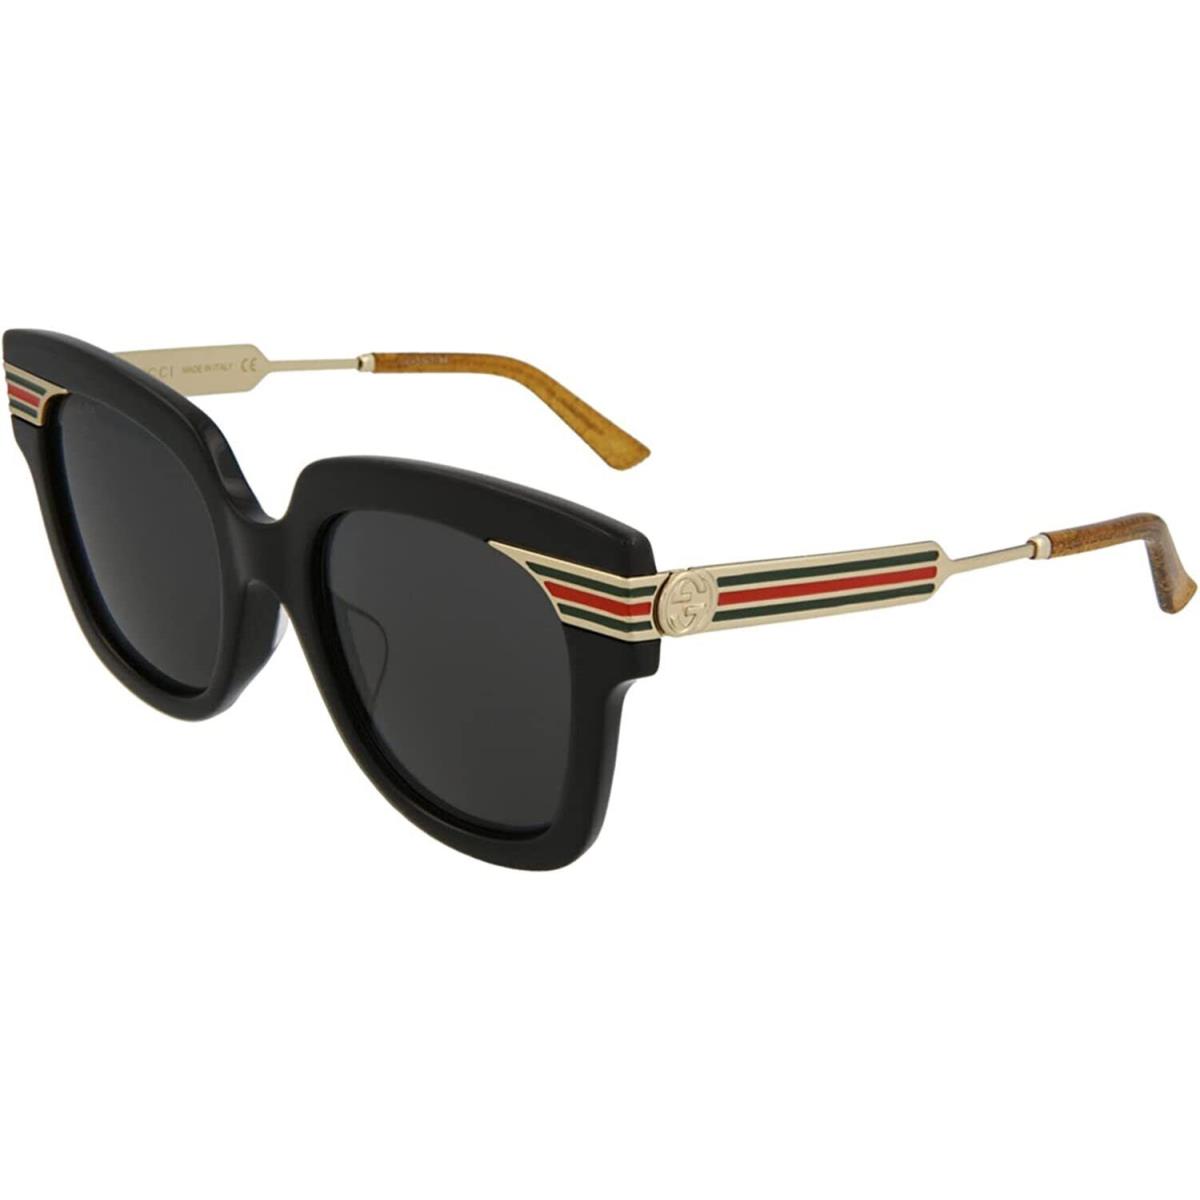 Gucci Sunglasses GG0281SA 001 51mm Black Gold / Grey Lens